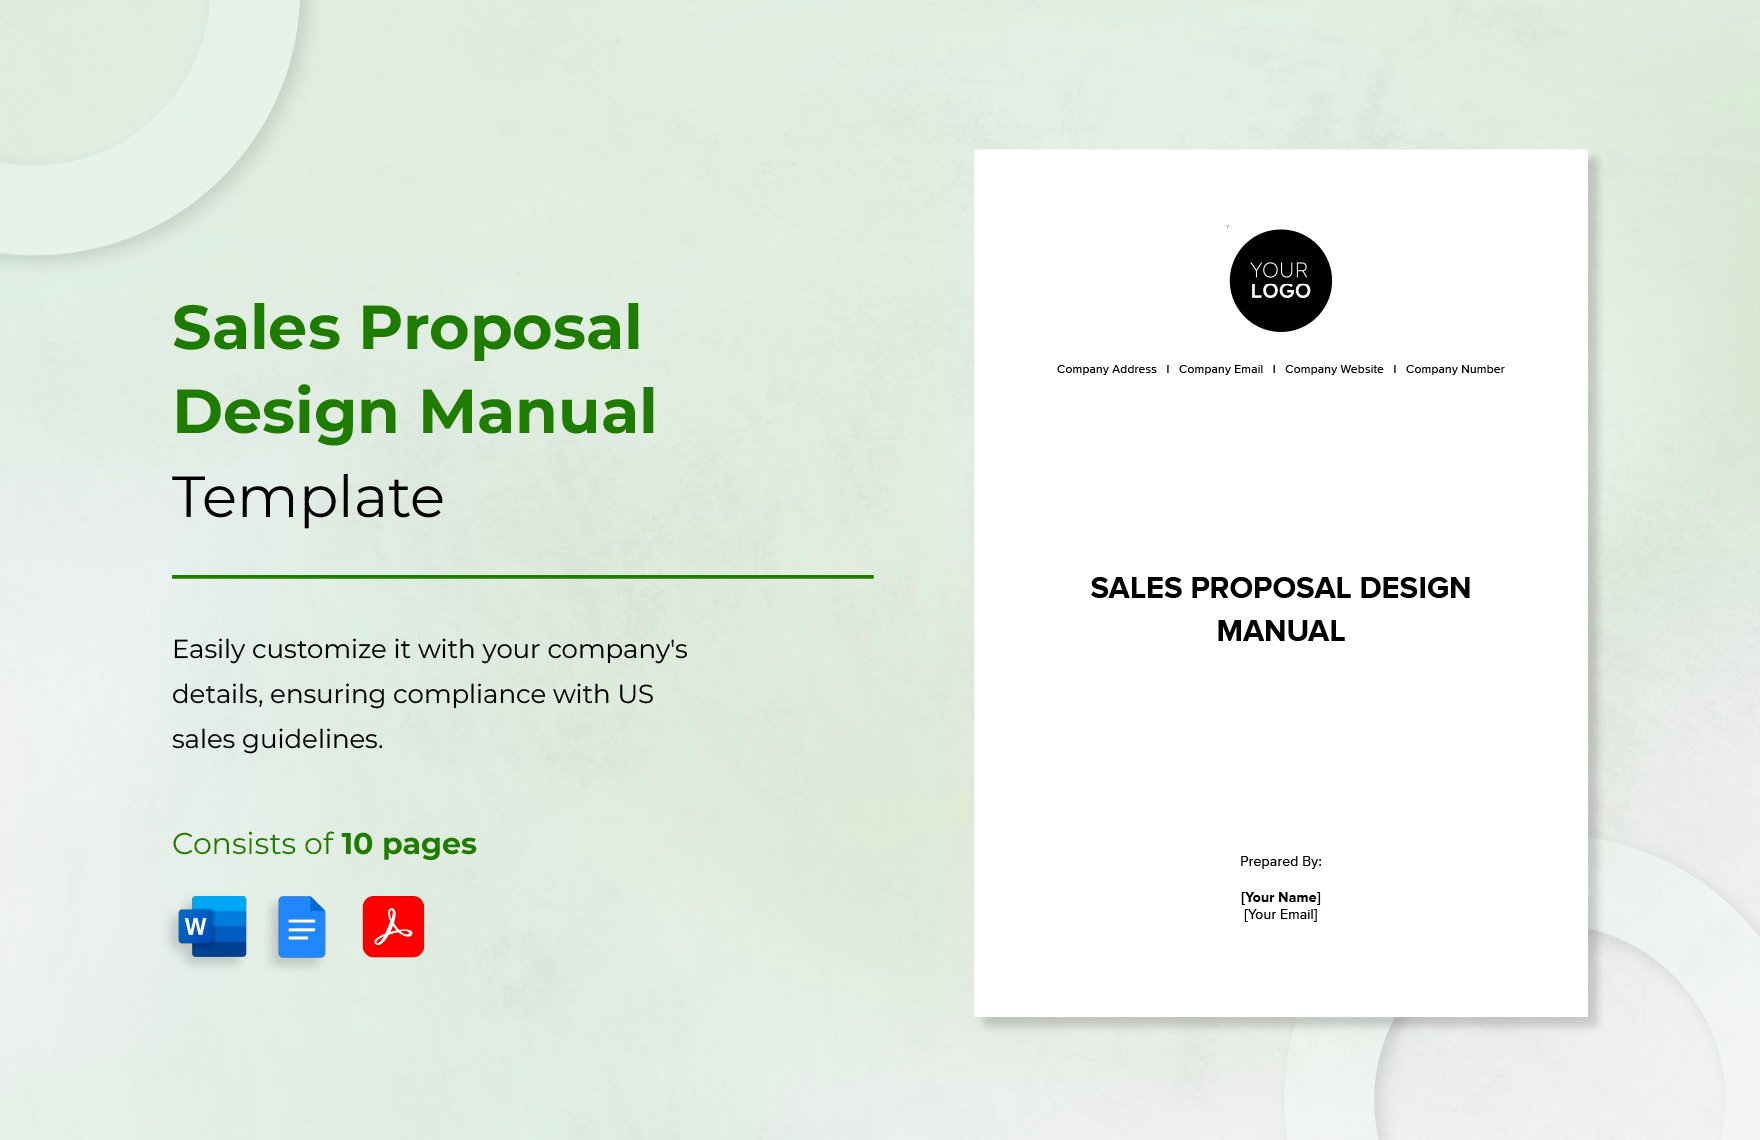 Sales Proposal Design Manual Template in Word, Google Docs, PDF